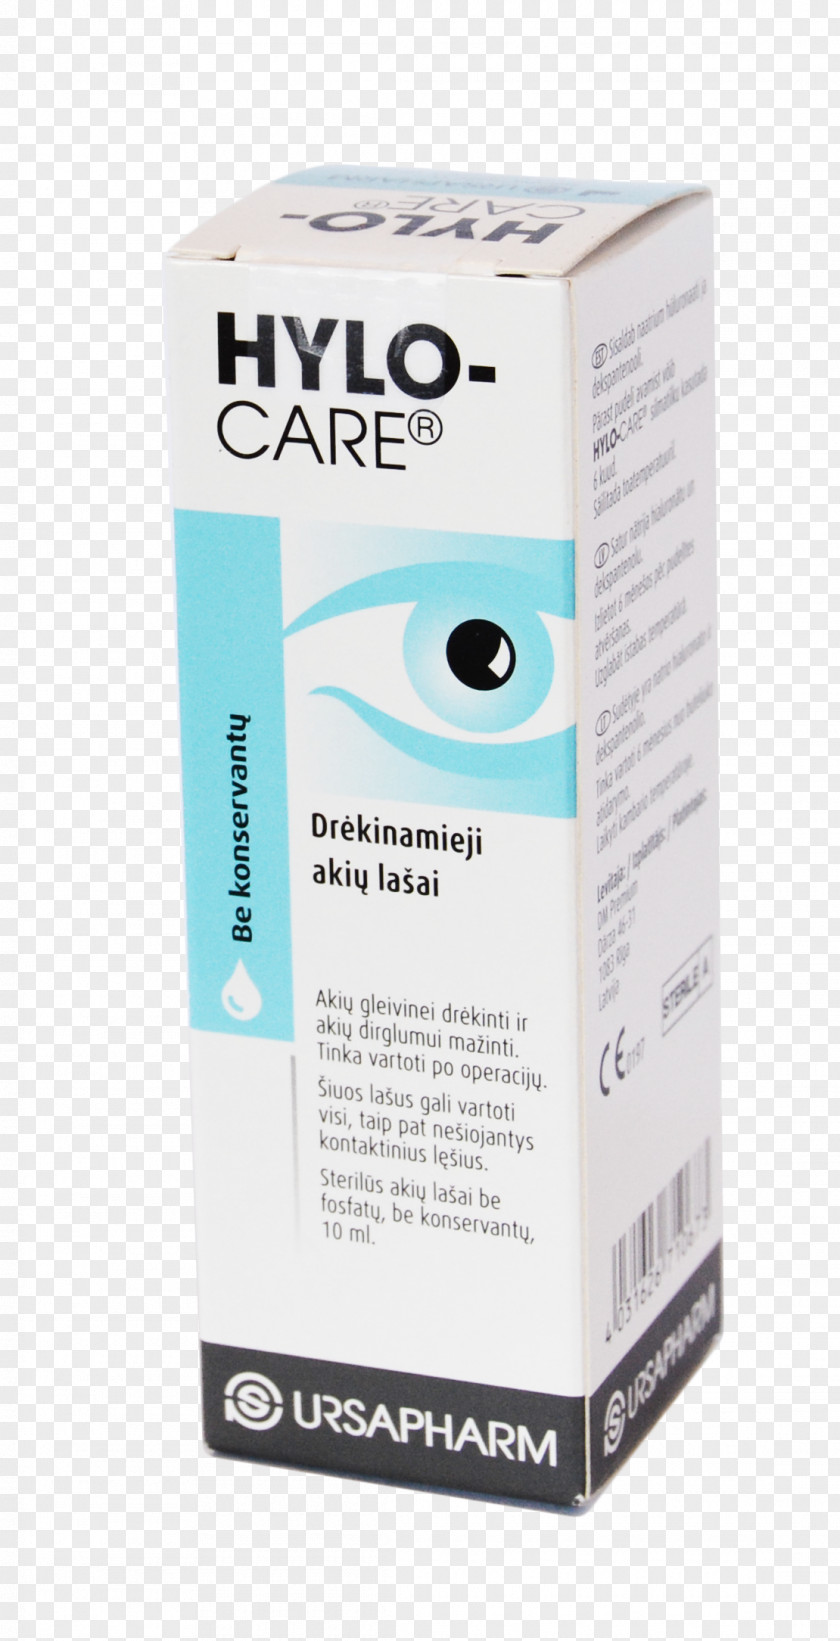 Water Hylo Care 10ml By Ursapharm Liquid Cream Solution PNG